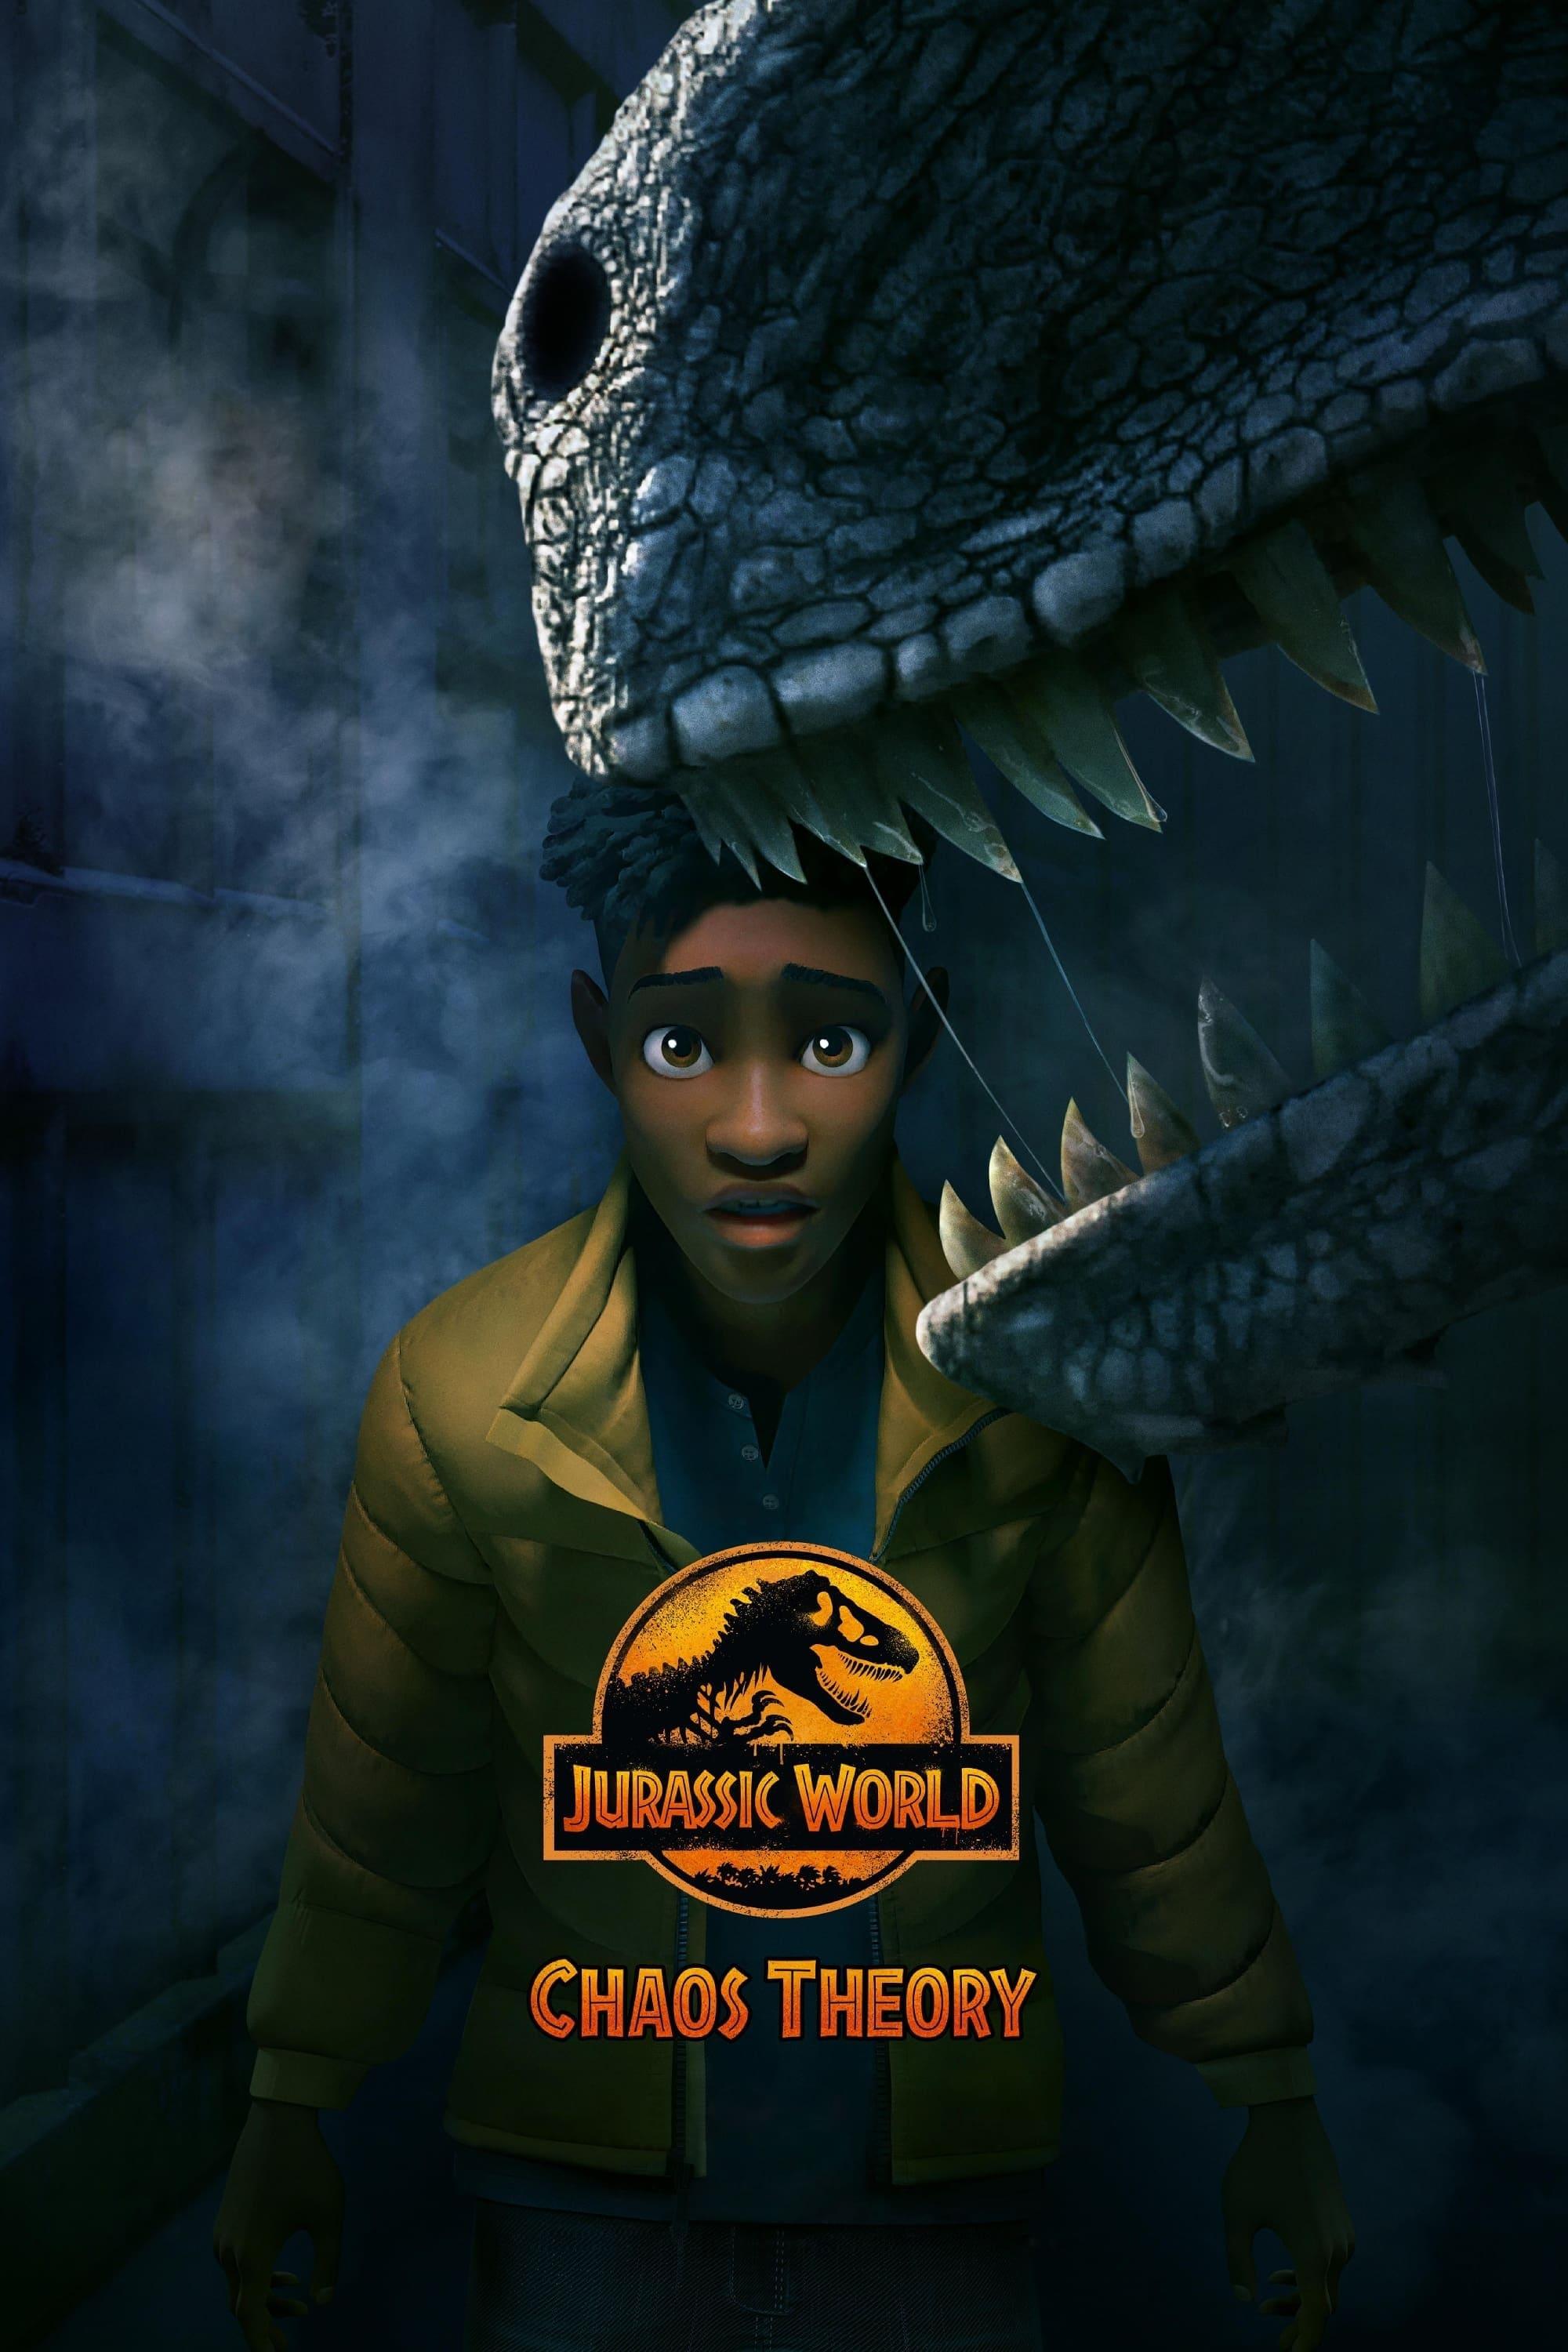 Jurassic World: Chaos Theory poster